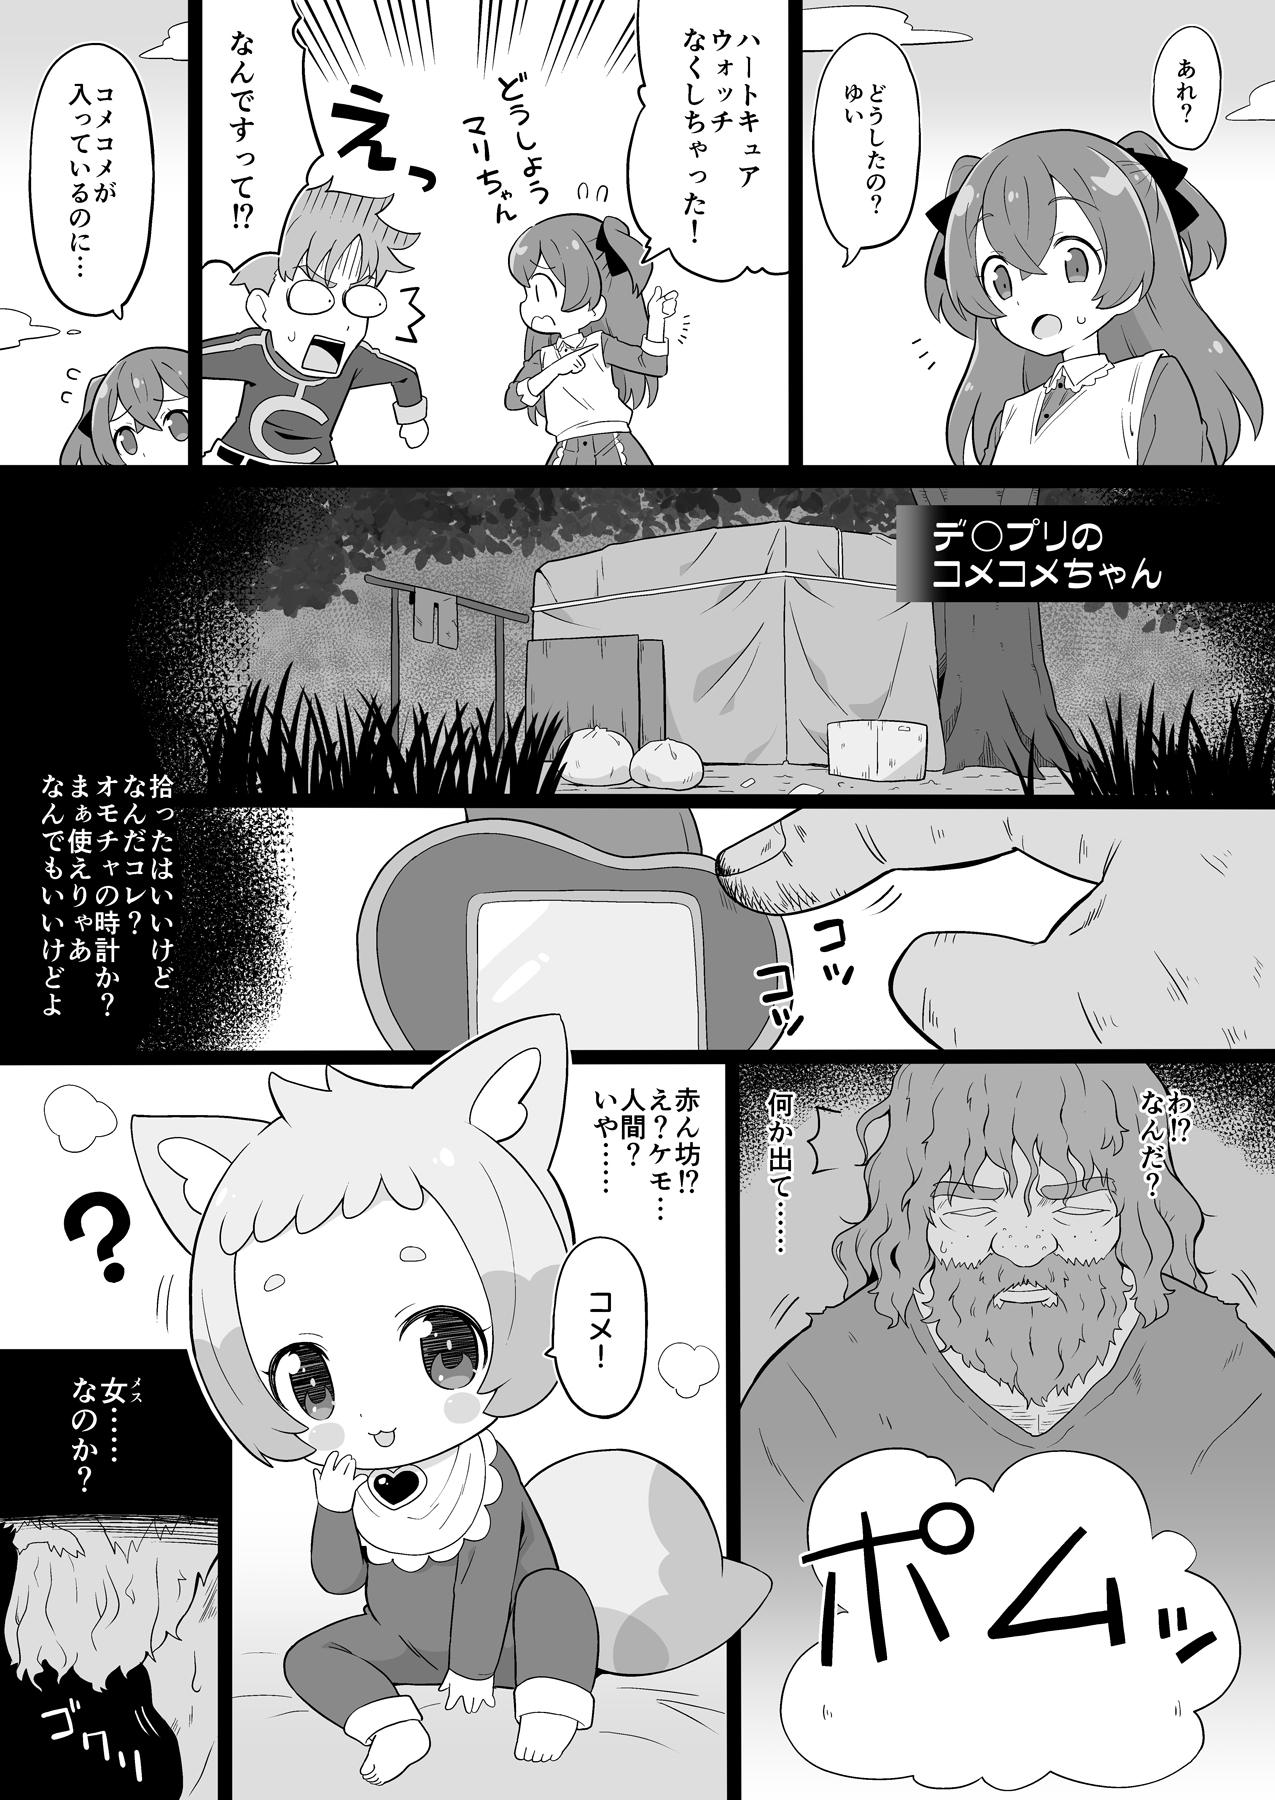 Amateurporn FAN Box Manga Matome Hon - The idolmaster Tate no yuusha no nariagari | the rising of the shield hero Gemendo - Page 10